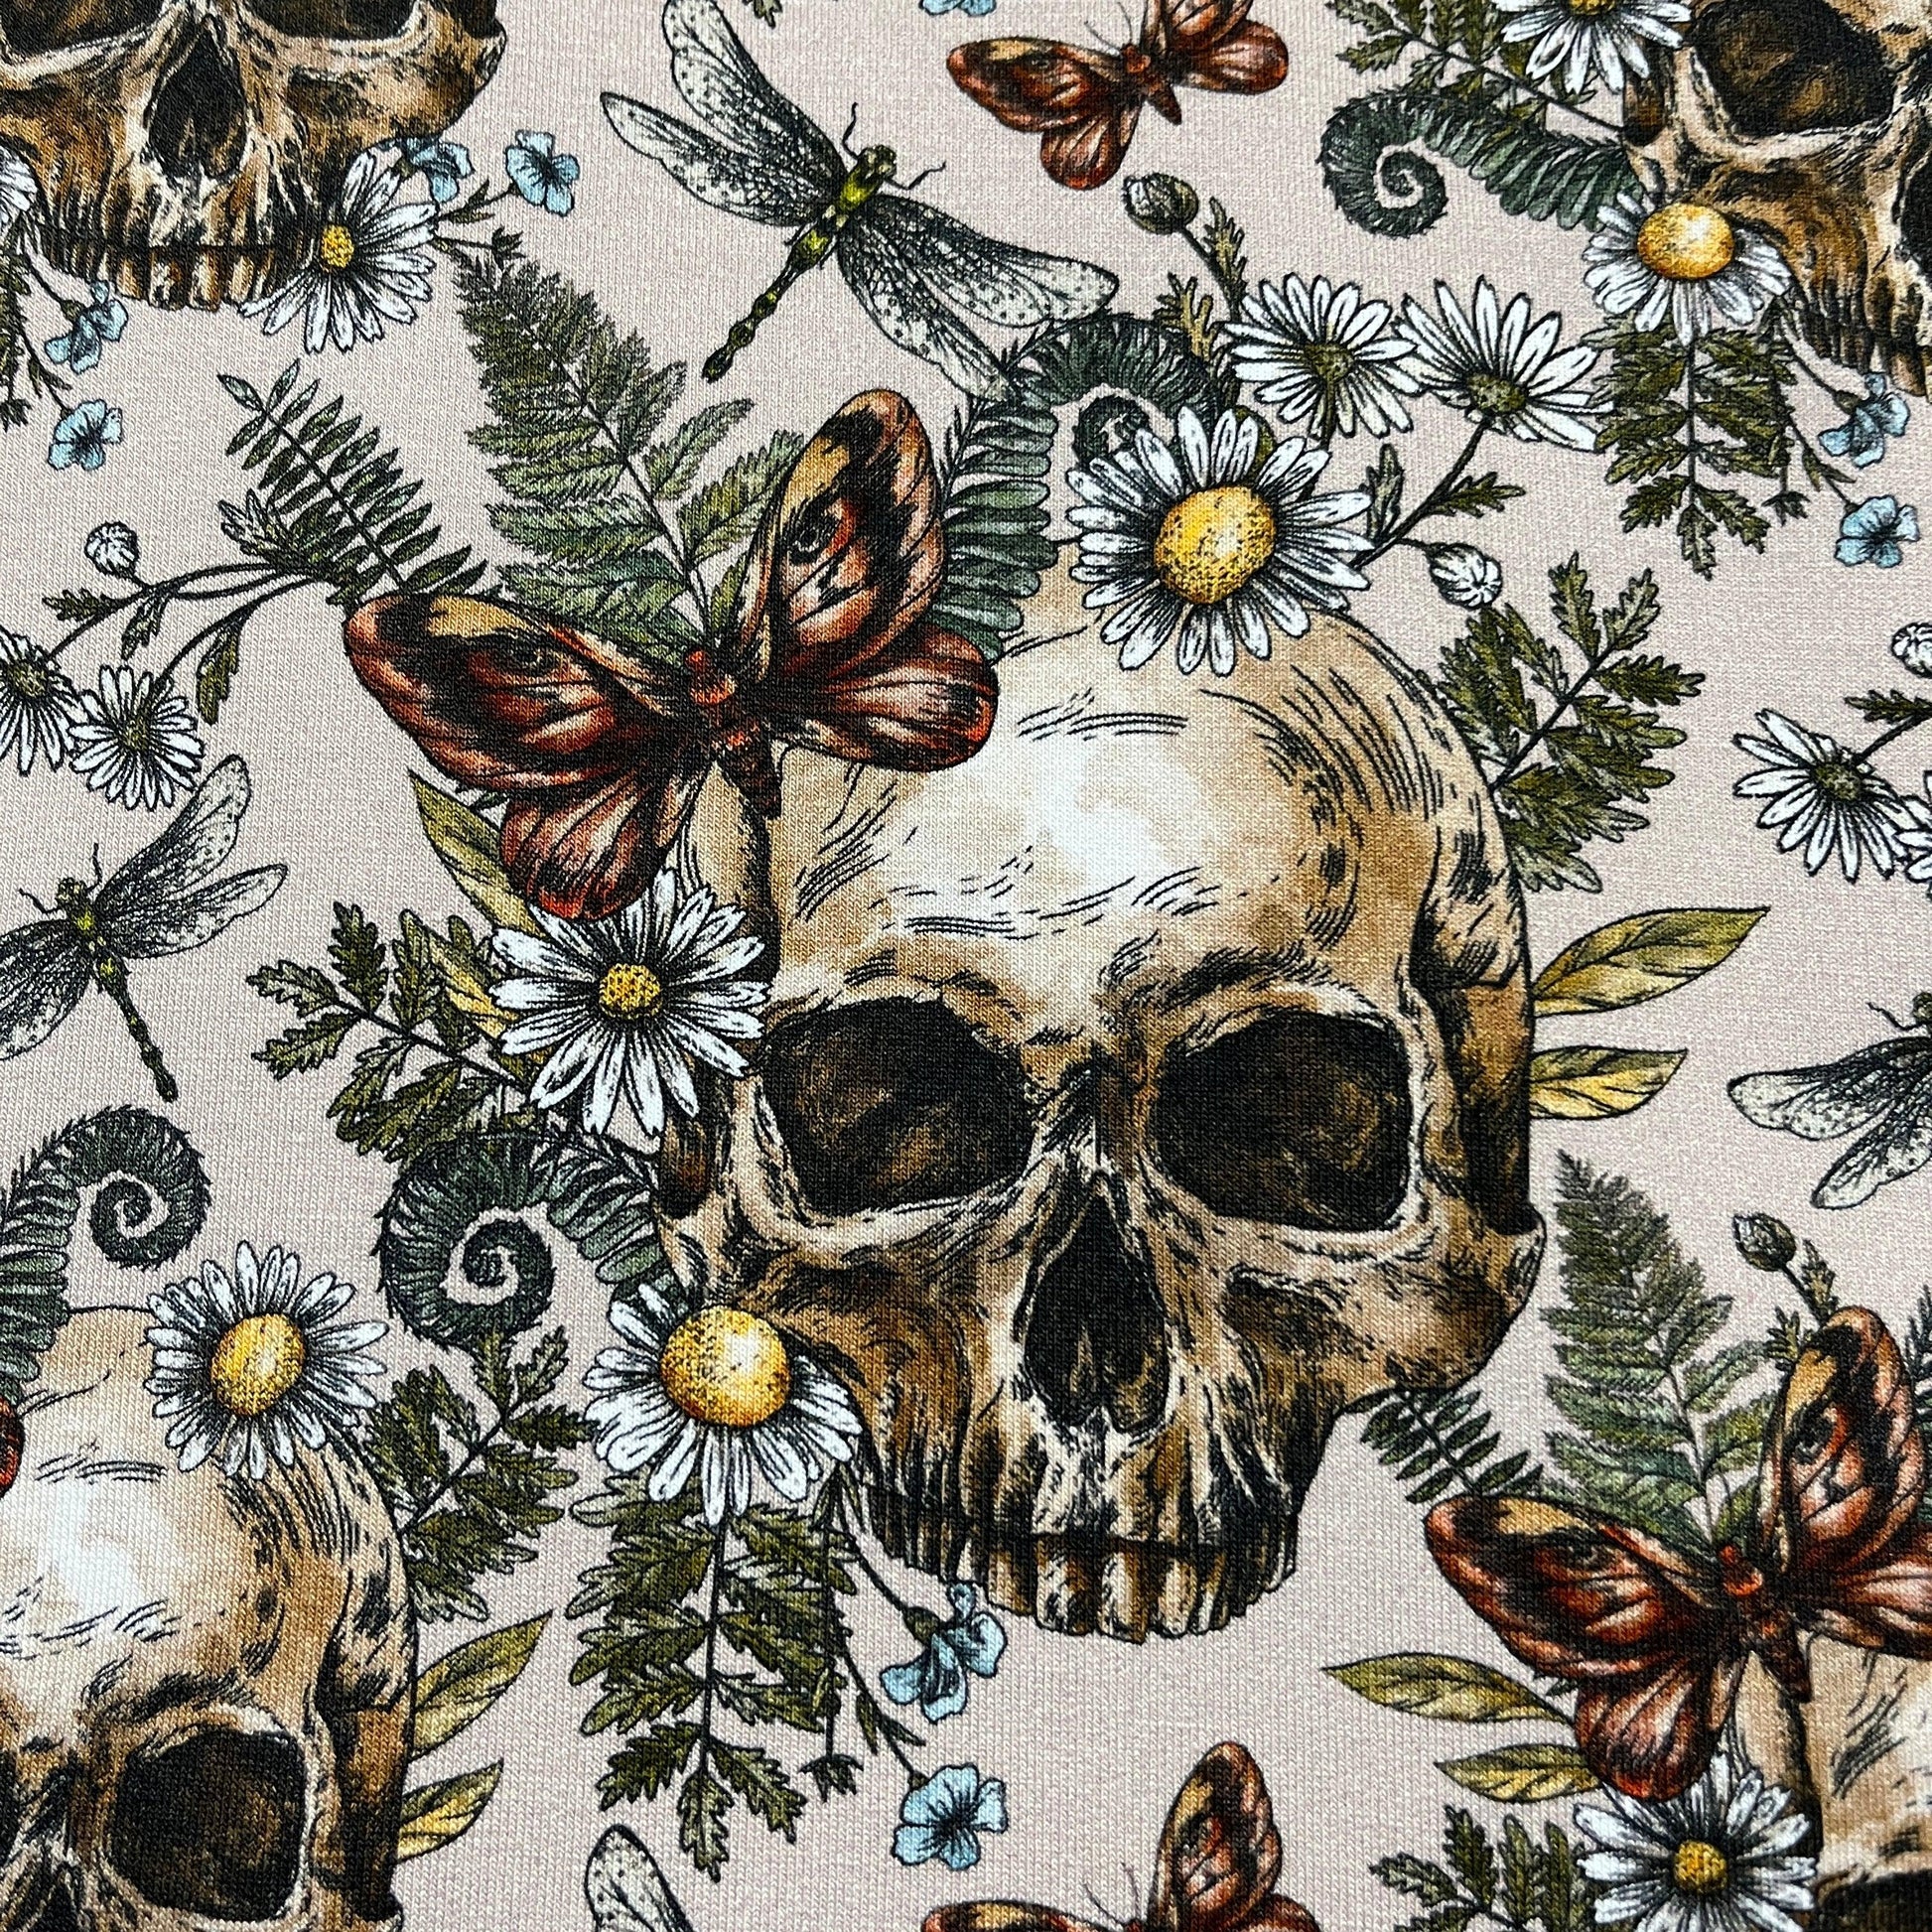 Skulls and Daisies on Bamboo/Spandex Jersey Fabric - Nature's Fabrics